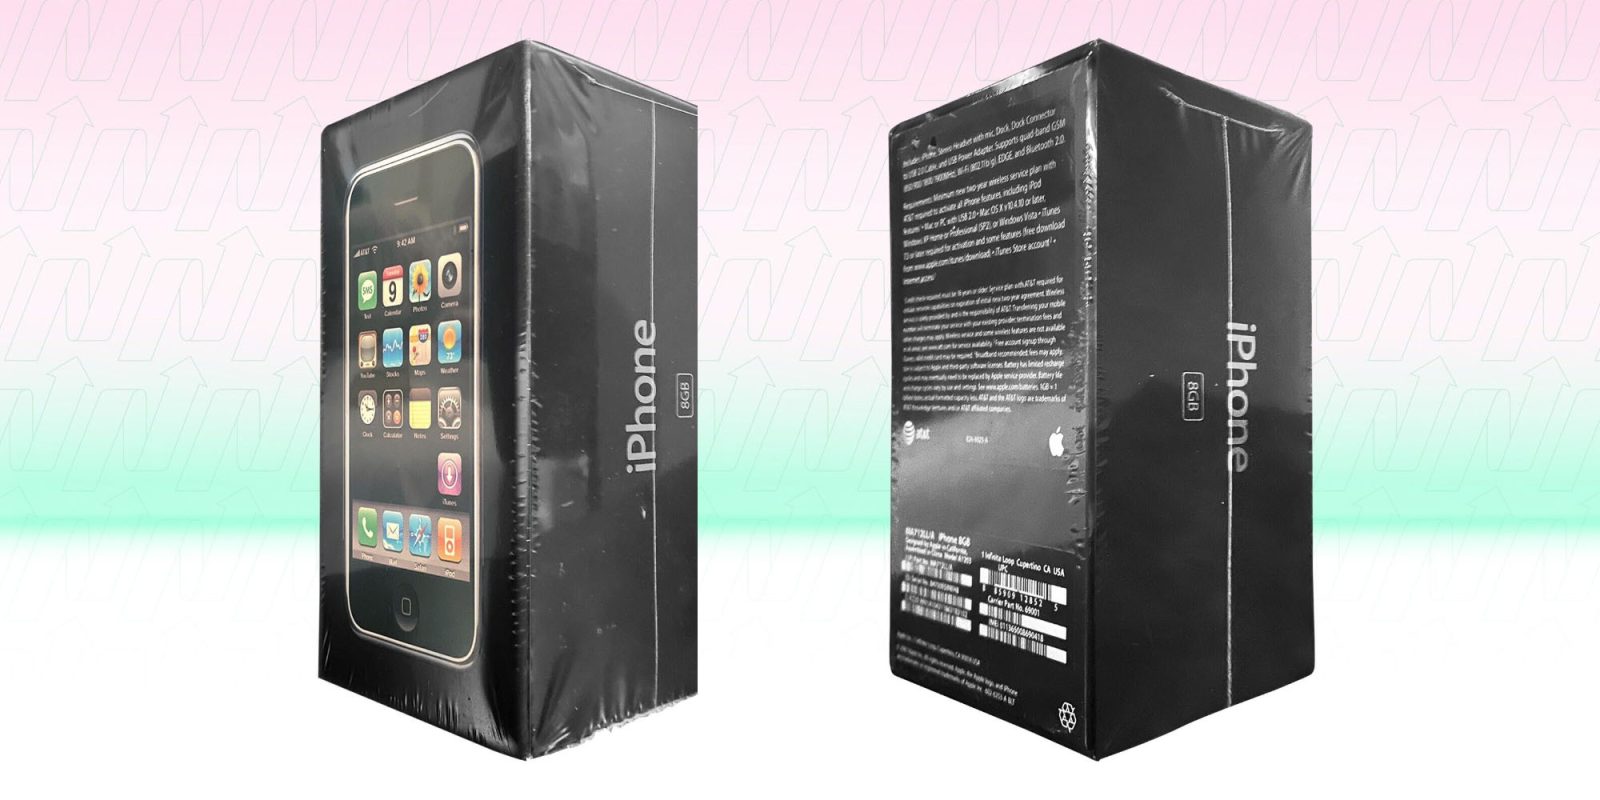 Sealed original iPhone latest auction